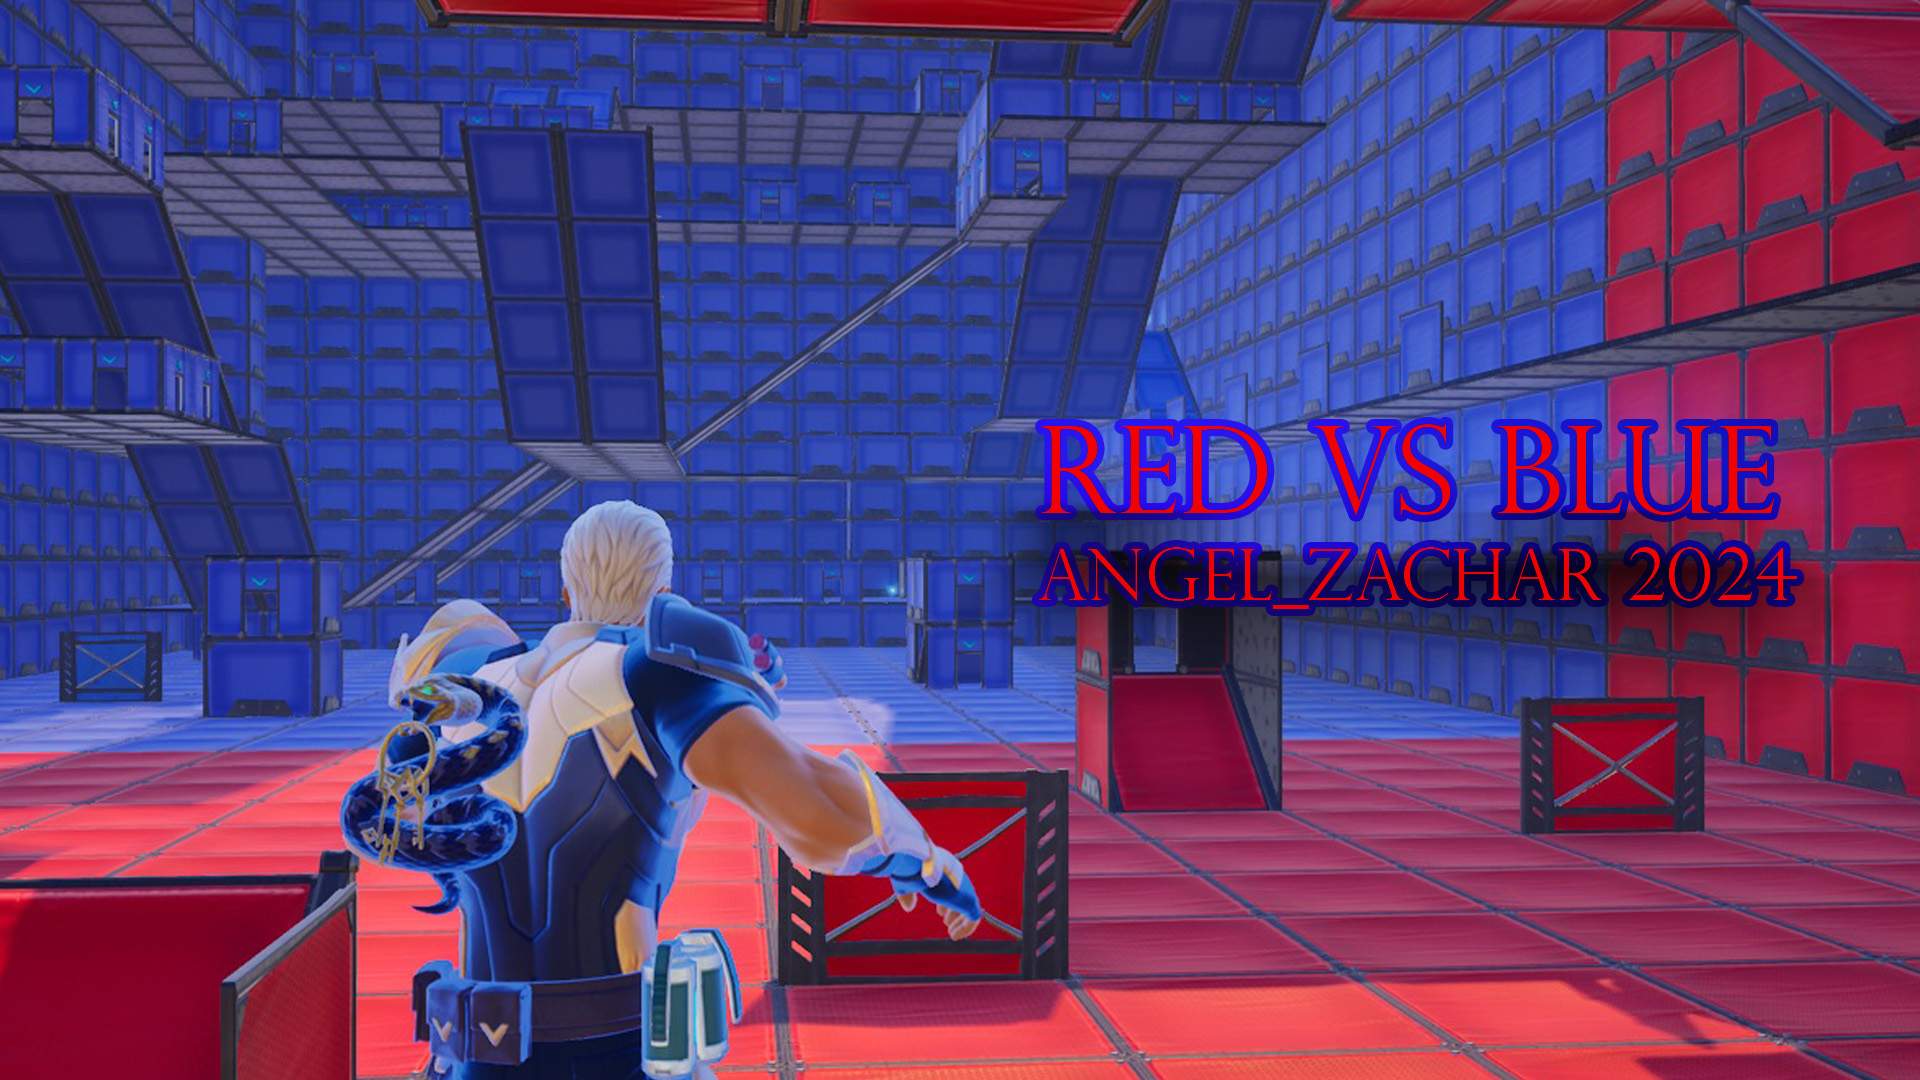 Red vs Blue ANGEL_ZACHAR 2024 image 2